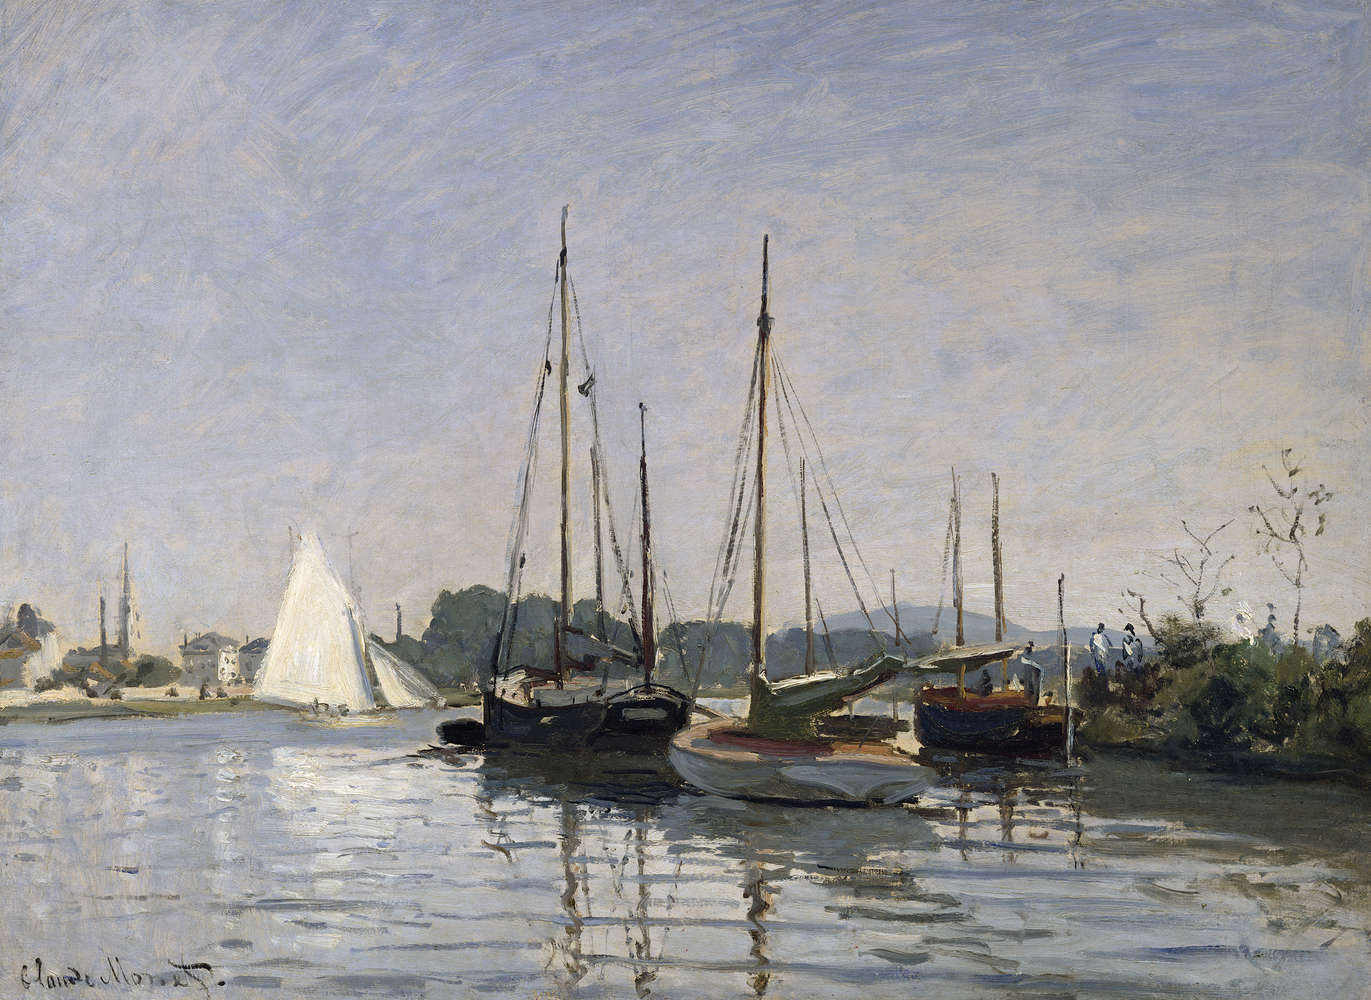             Mural "Barcos de recreo, Argenteuil" de Claude Monet
        